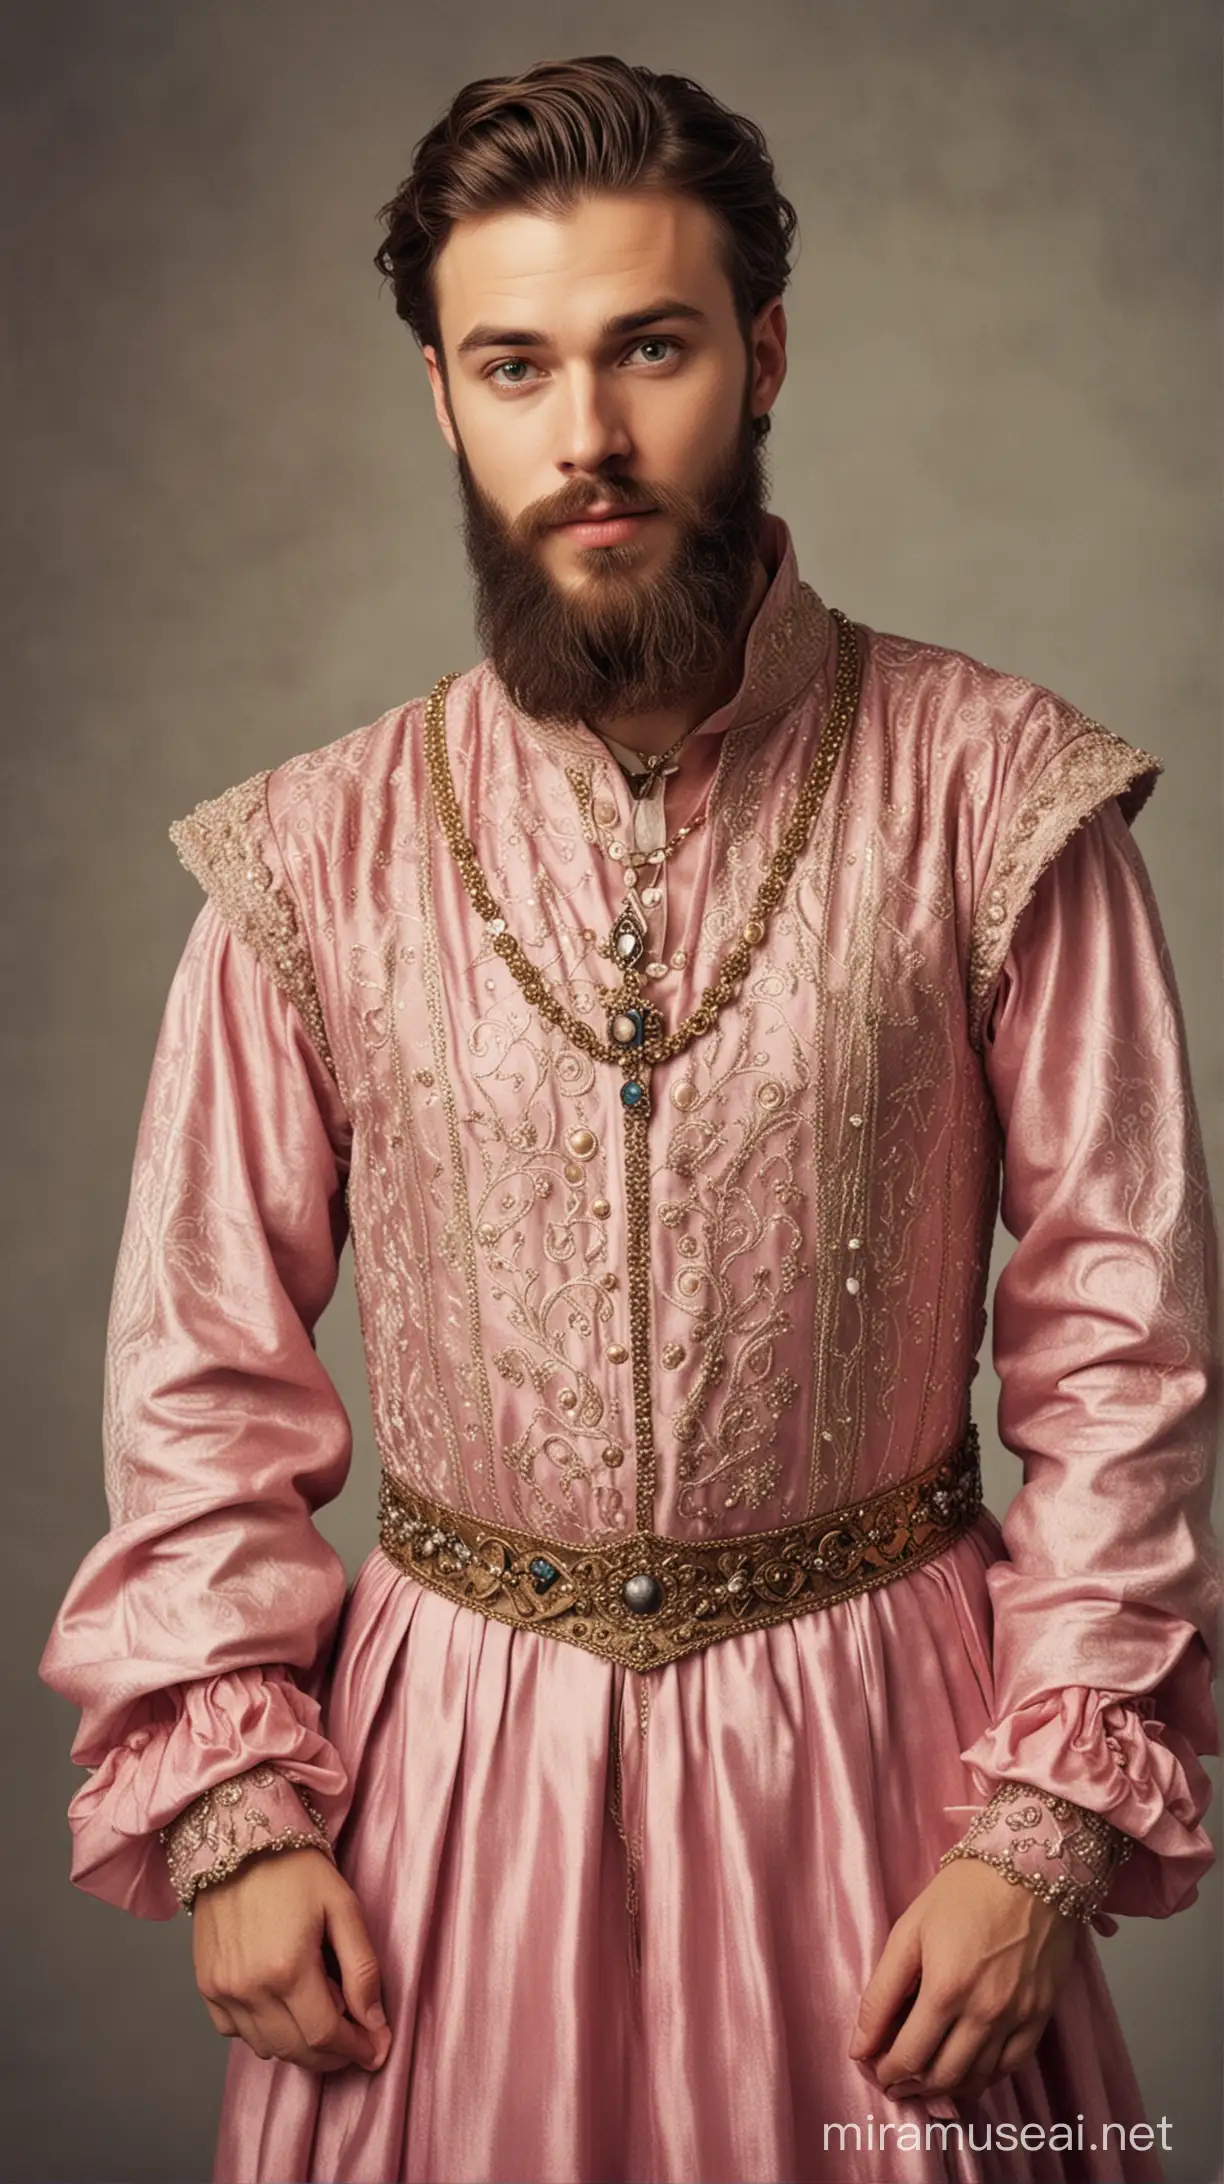 Bearded Man in Medieval Princess Attire